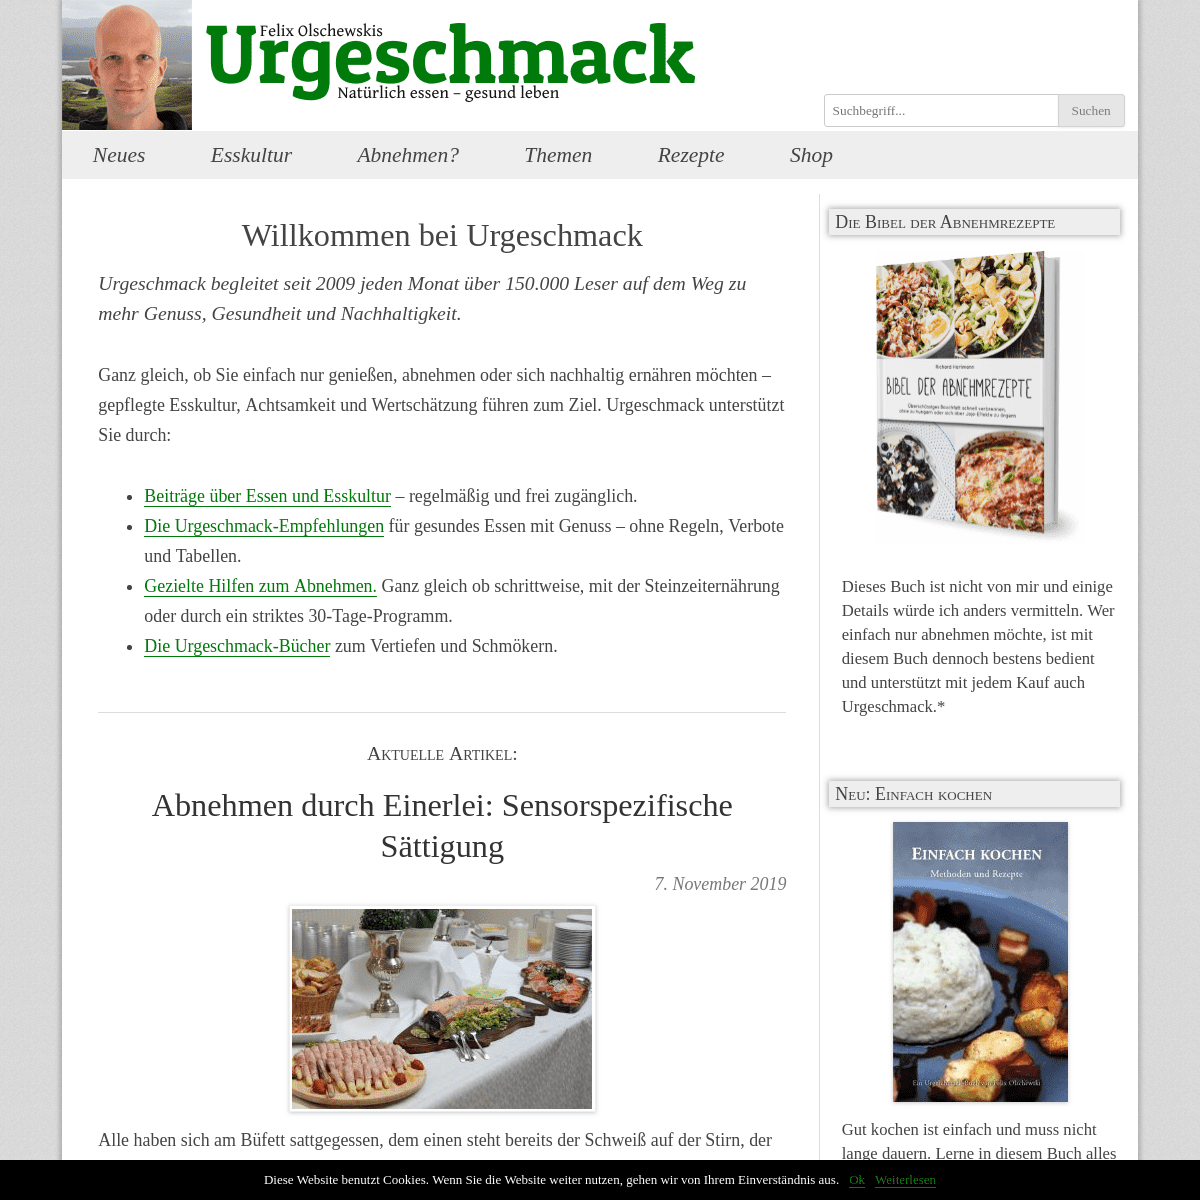 A complete backup of urgeschmack.de